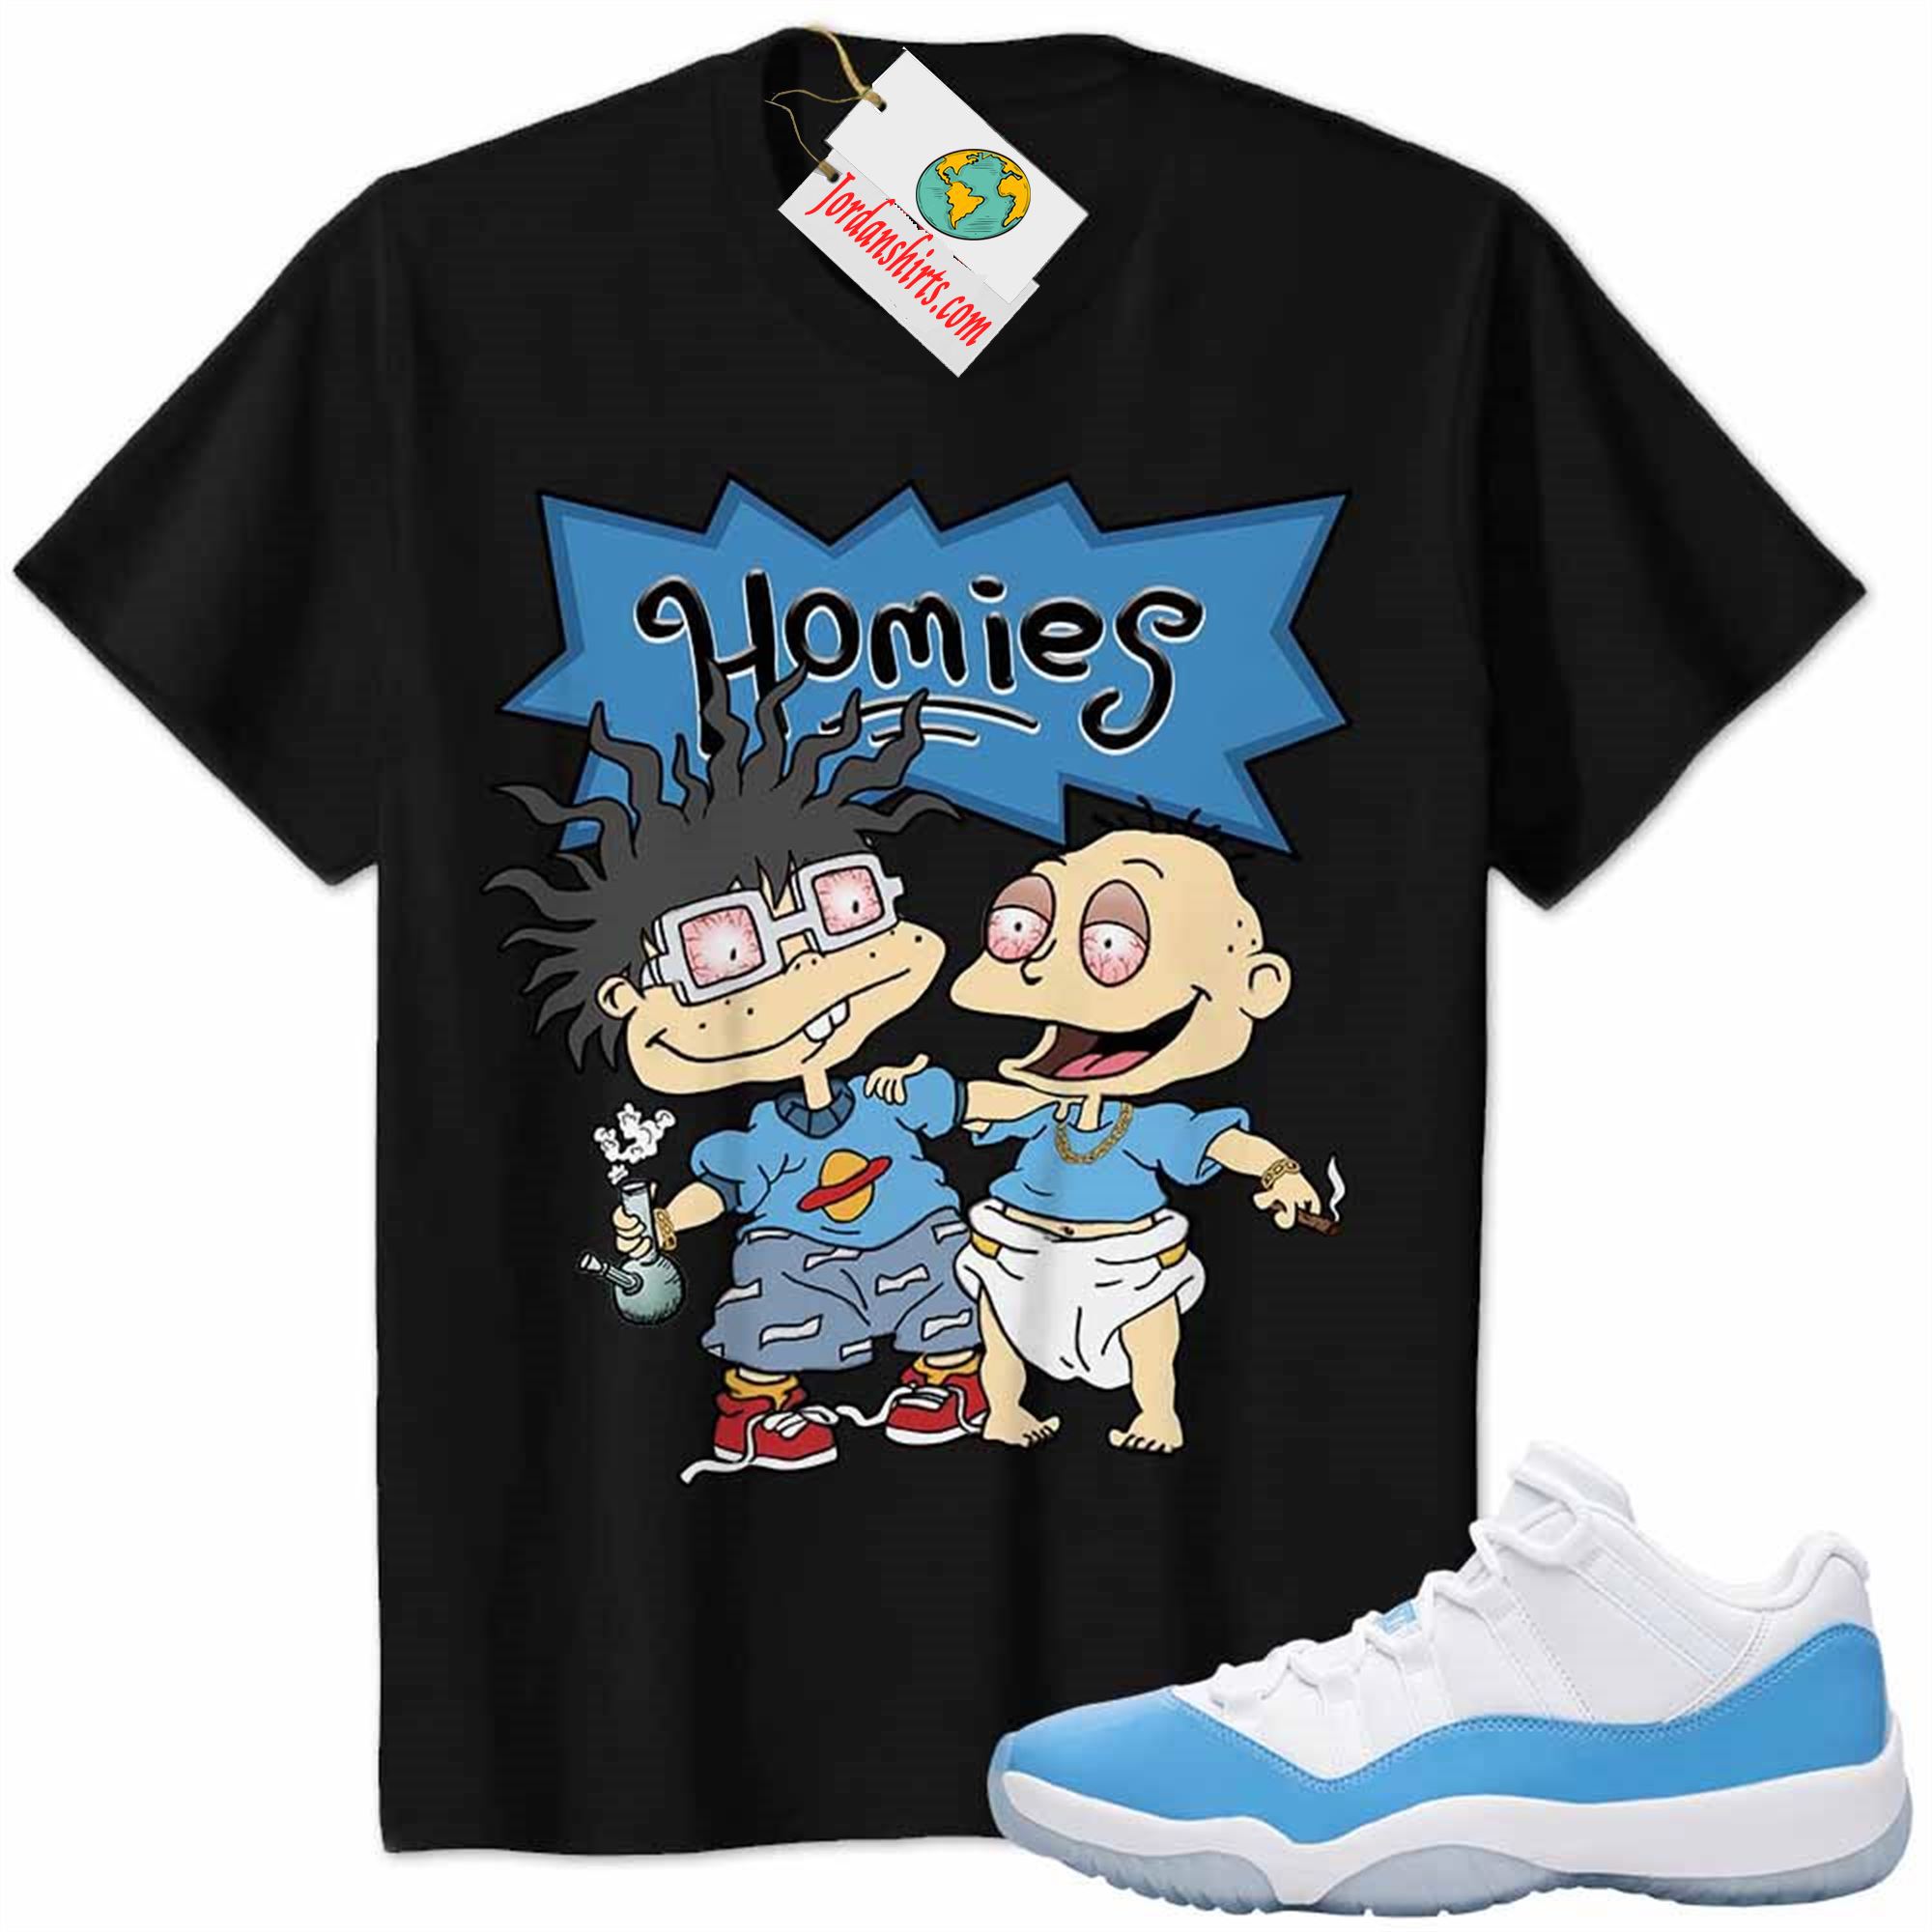 Jordan 11 Shirt, Jordan 11 Unc Shirt Hommies Tommy Pickles Chuckie Finster Rugrats Black Full Size Up To 5xl